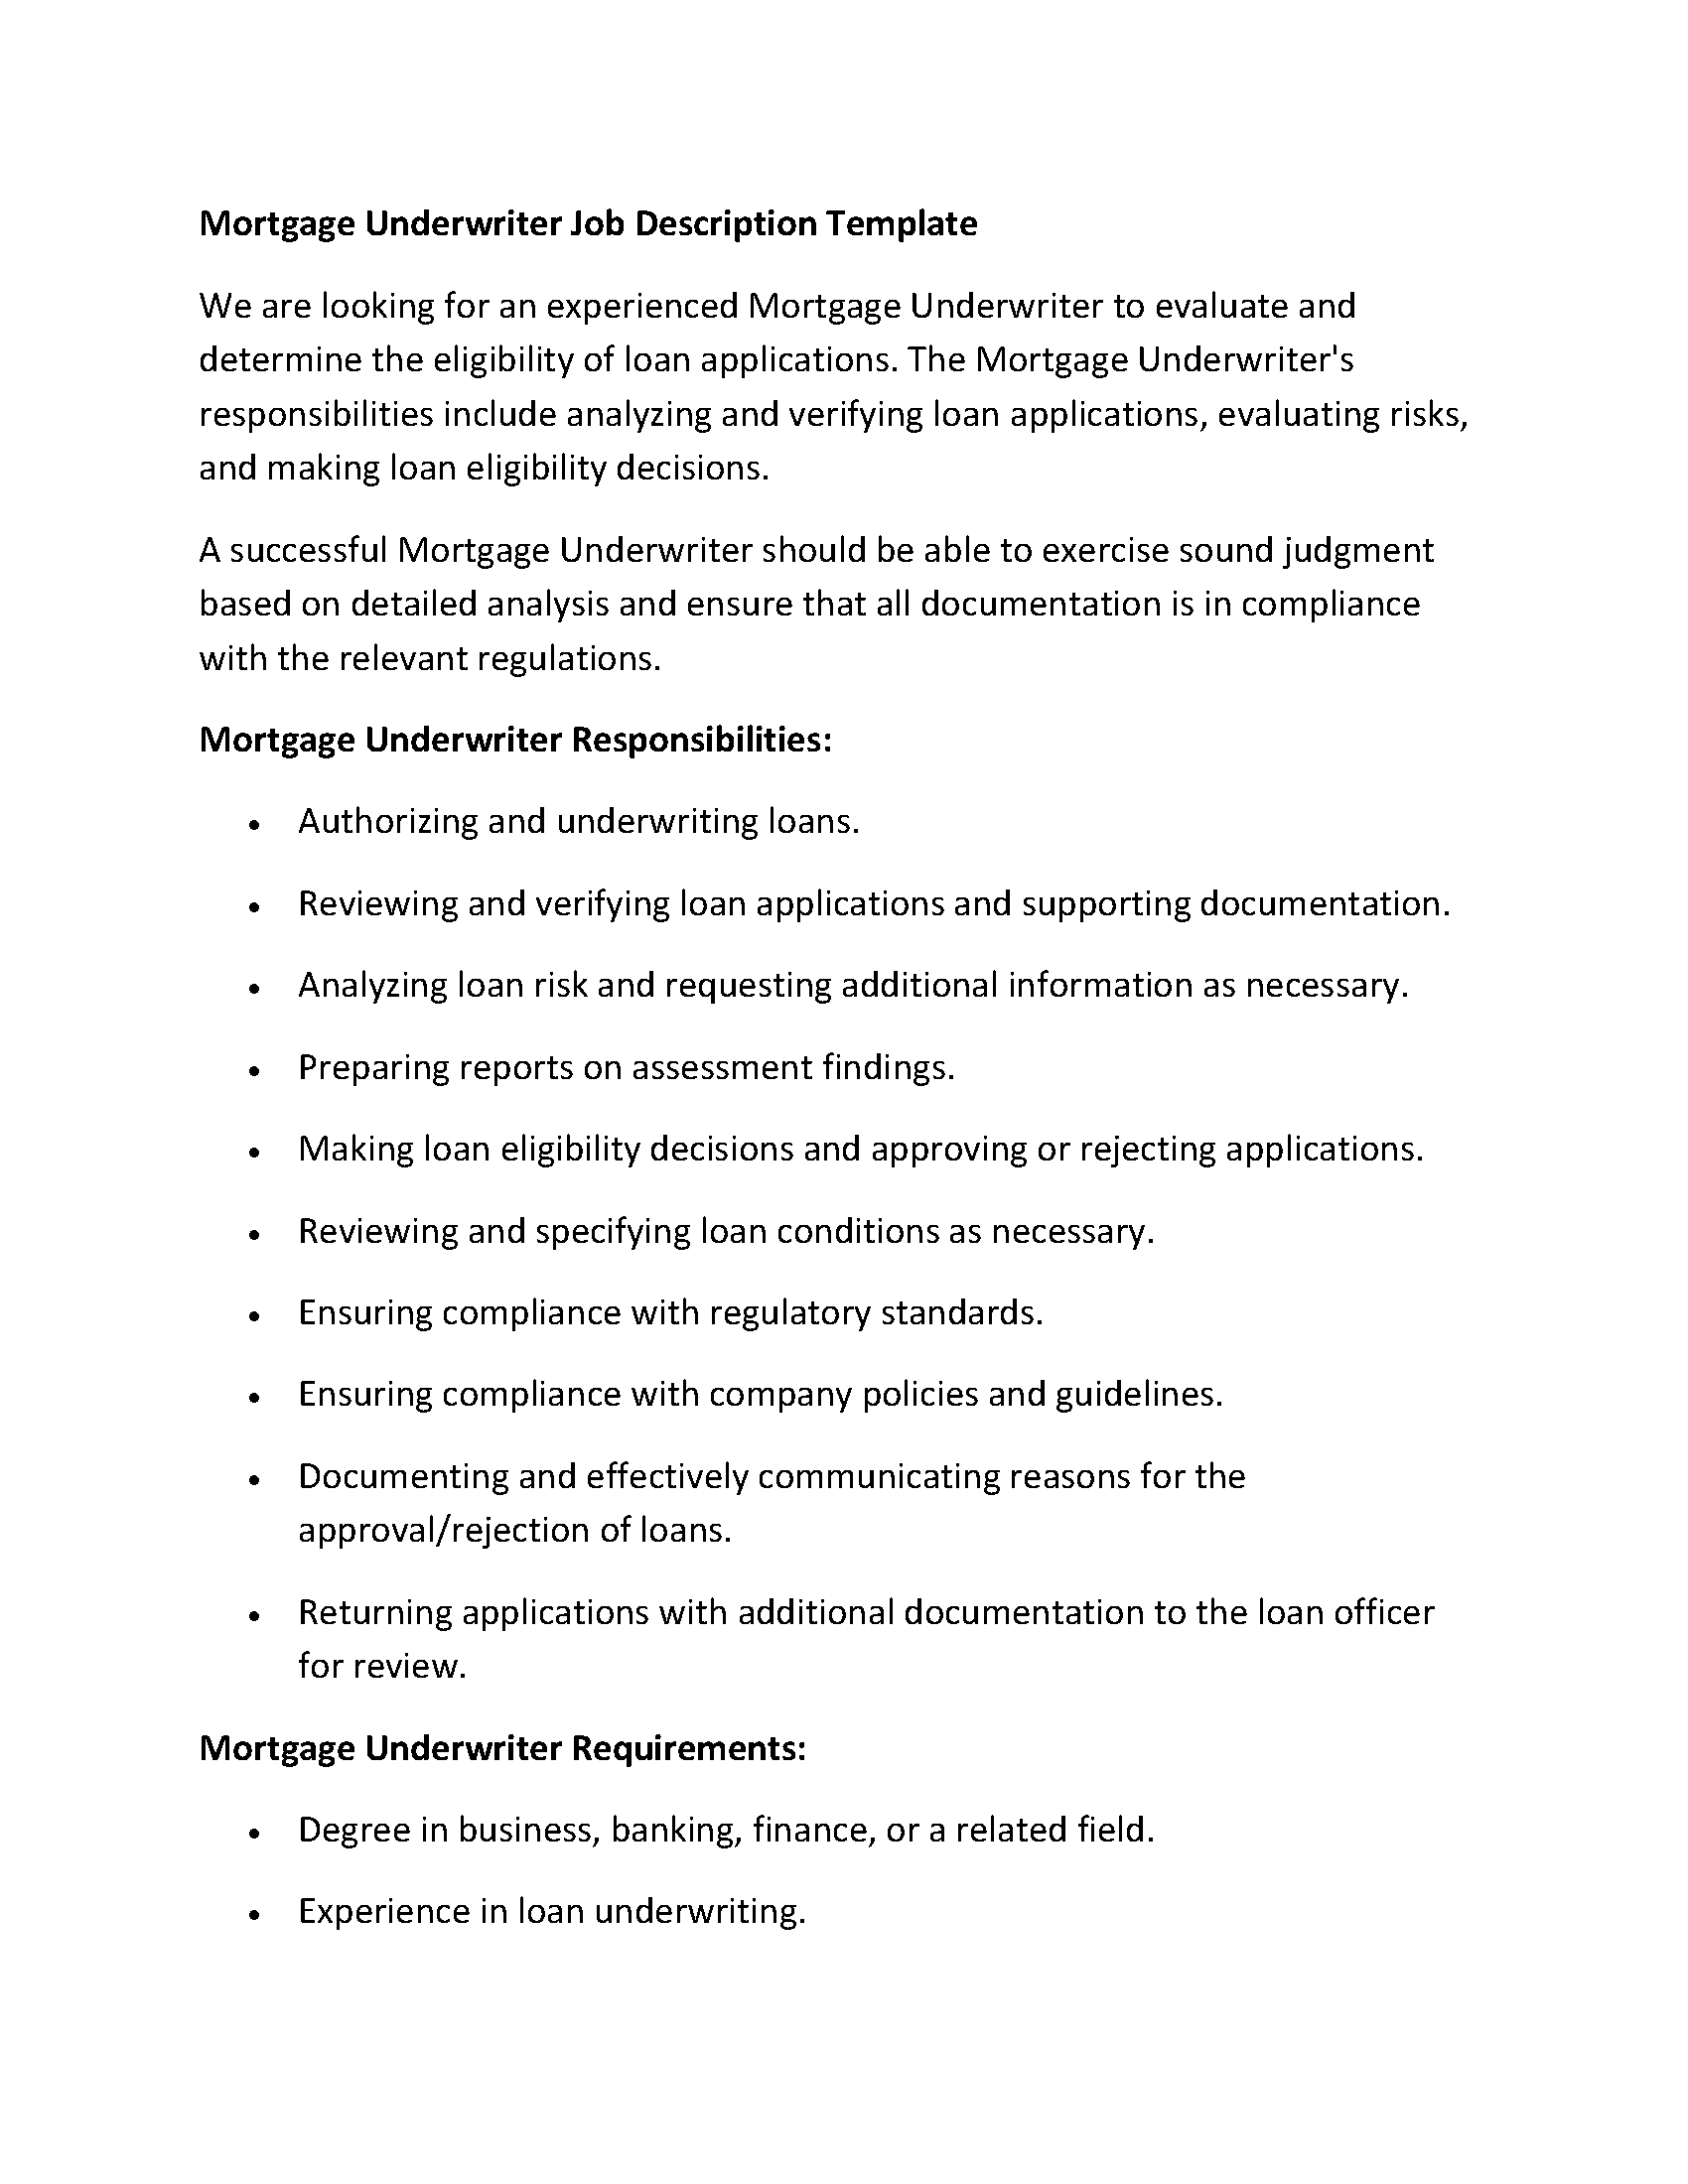 Mortgage Underwriter Job Description Template